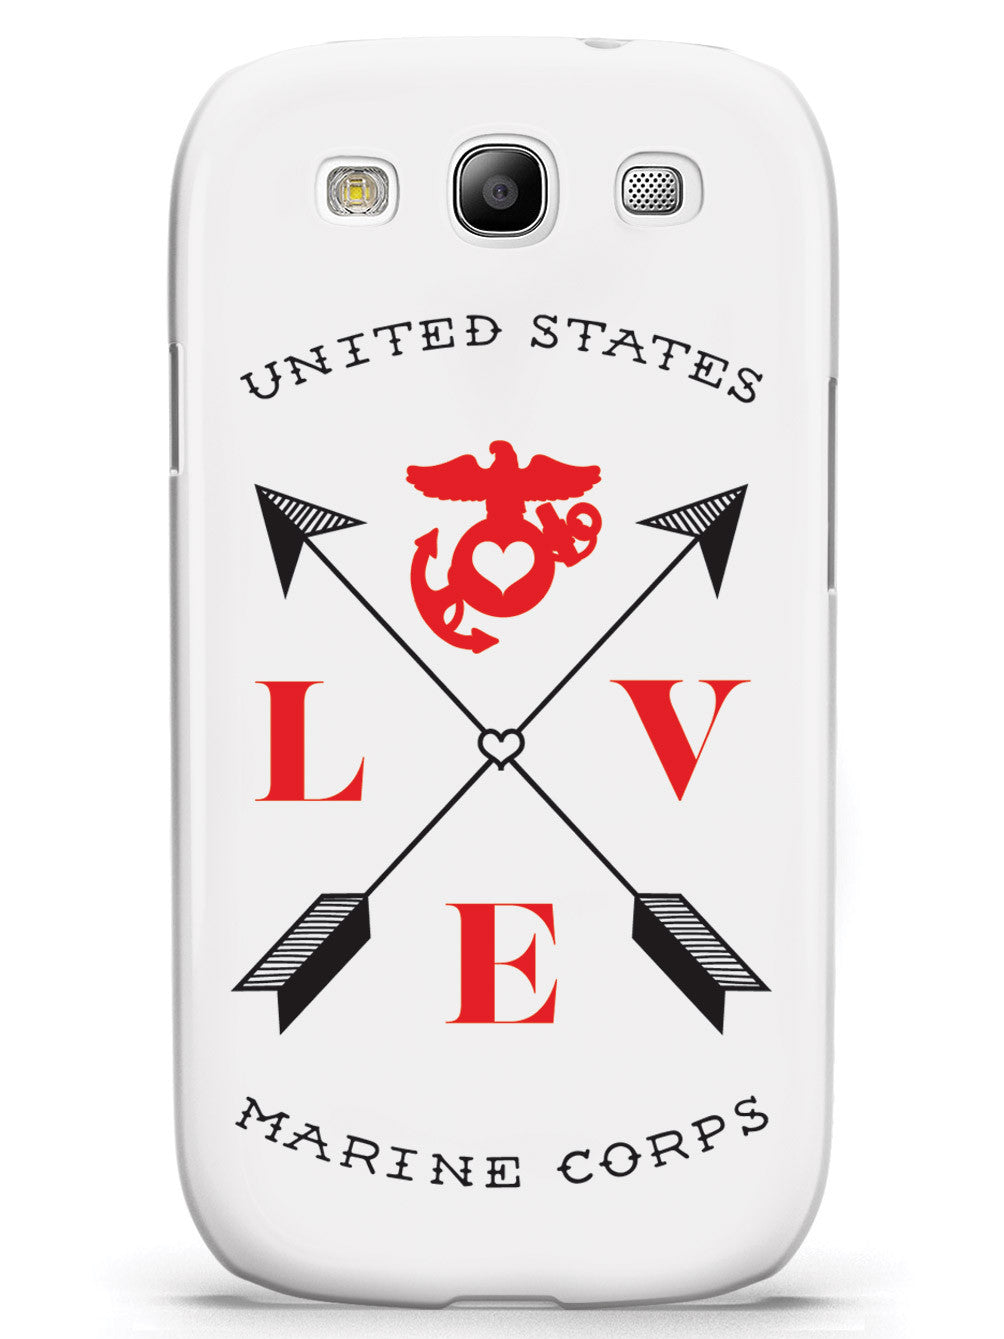 Love Arrow Cross - U.S. Marine Corps Case